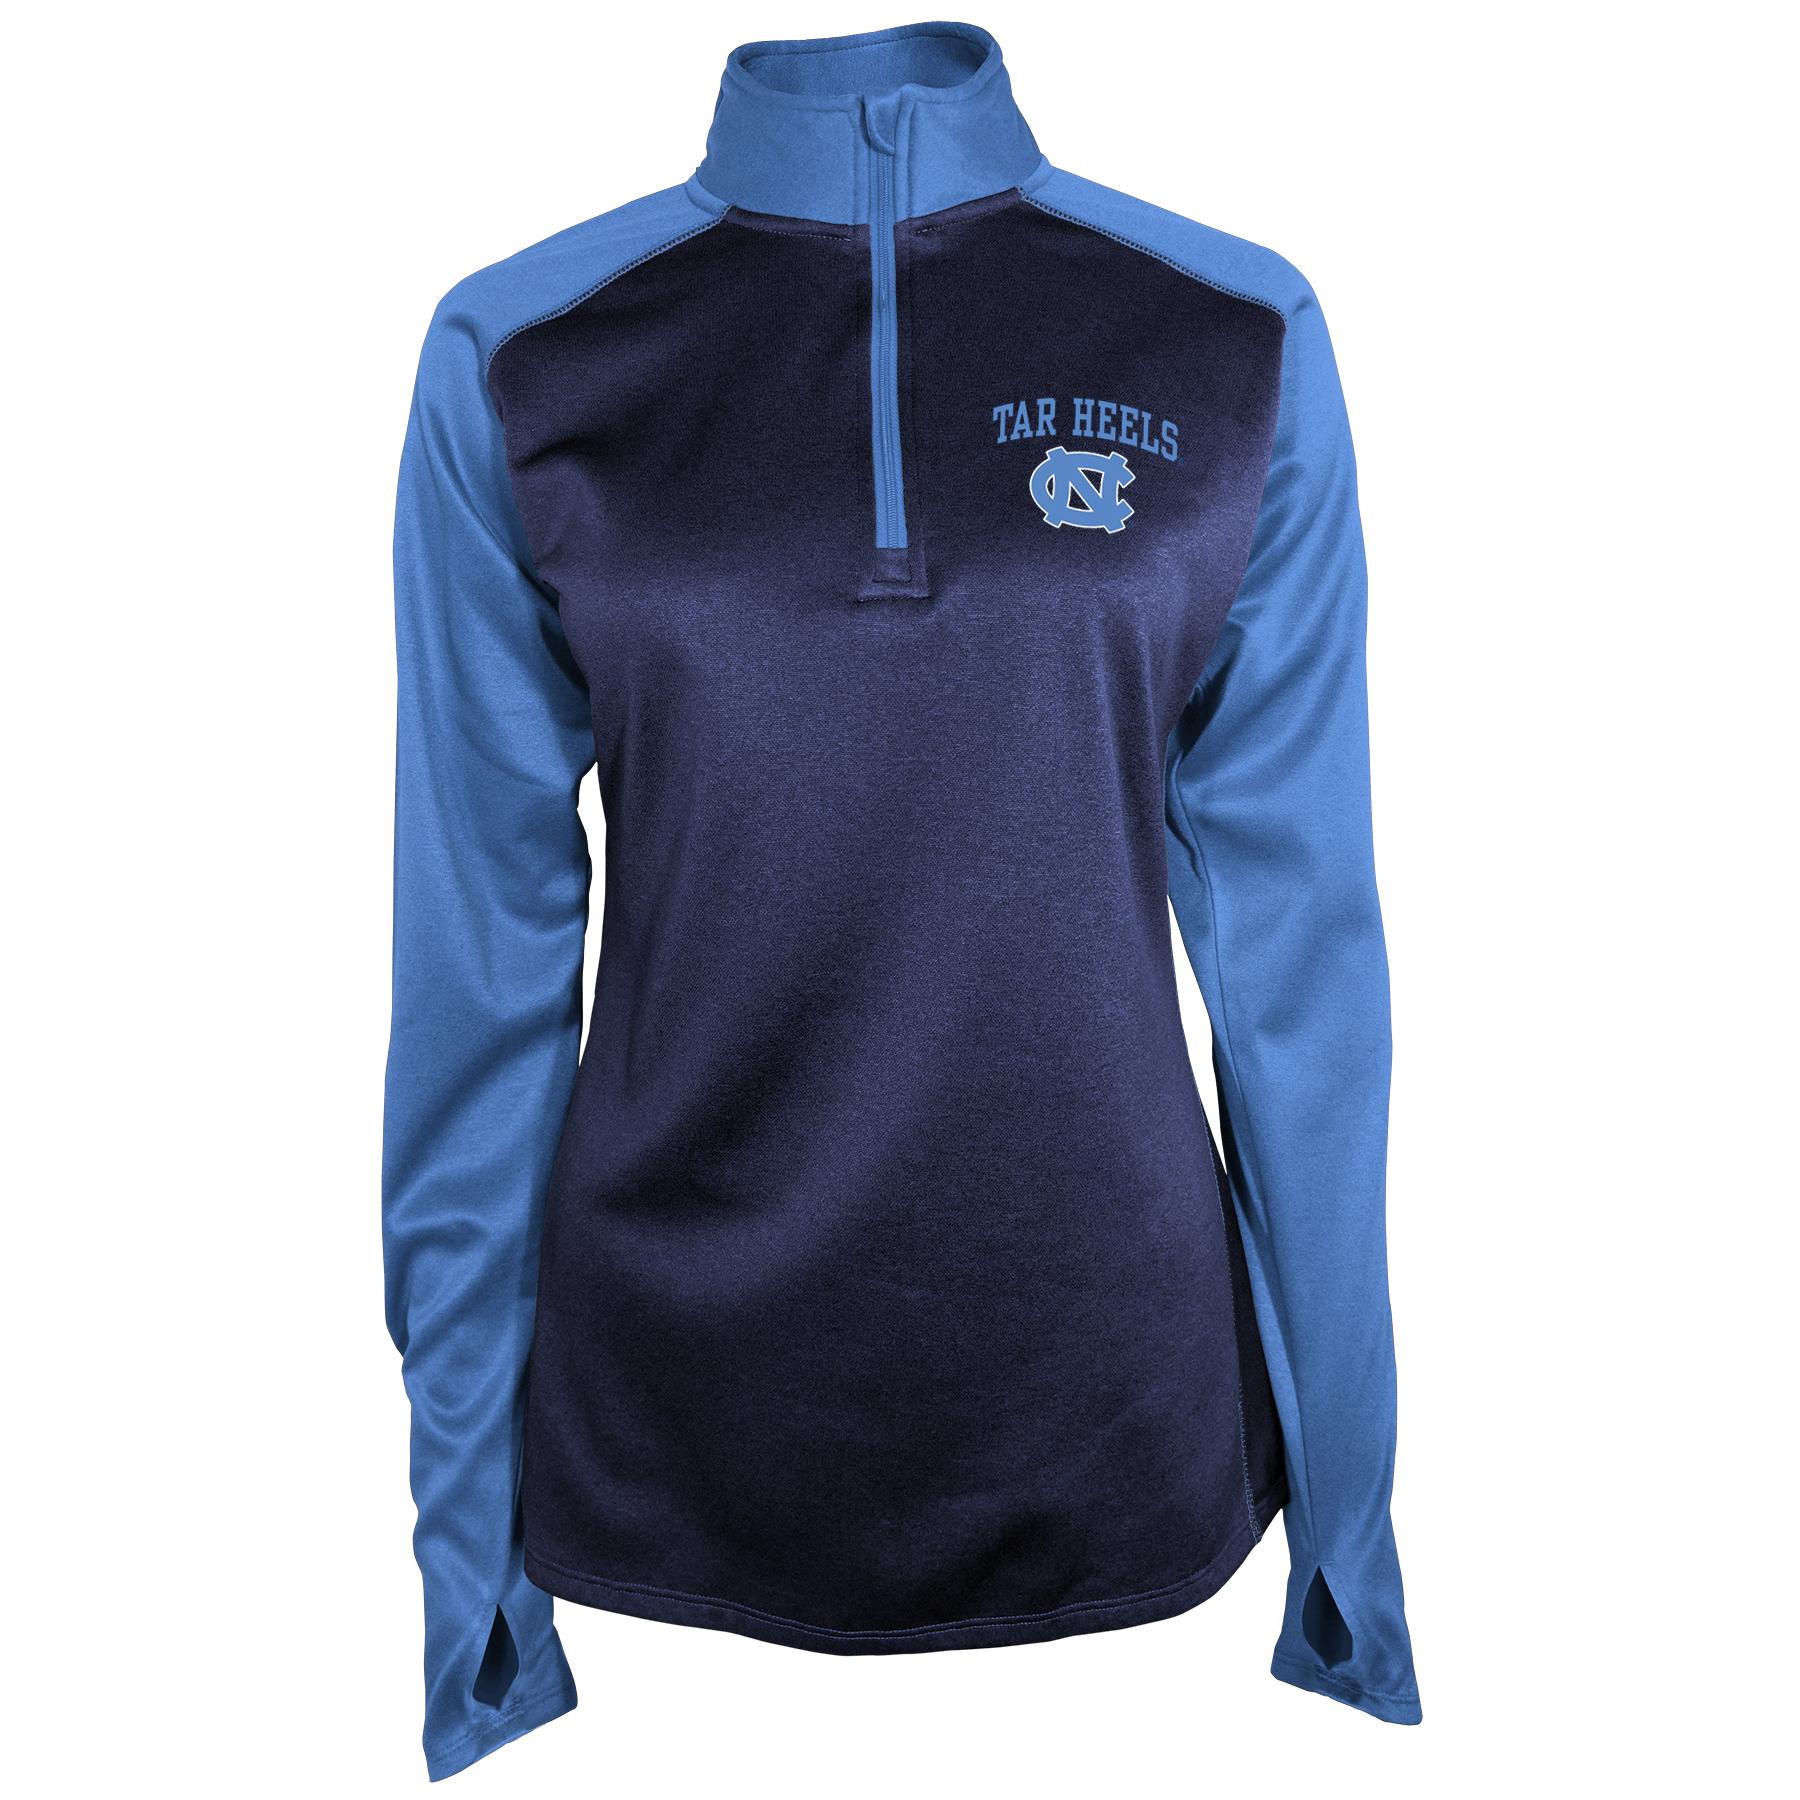 NCAA Women's Quarter-Zip Athletic Shirt - University of North Carolina